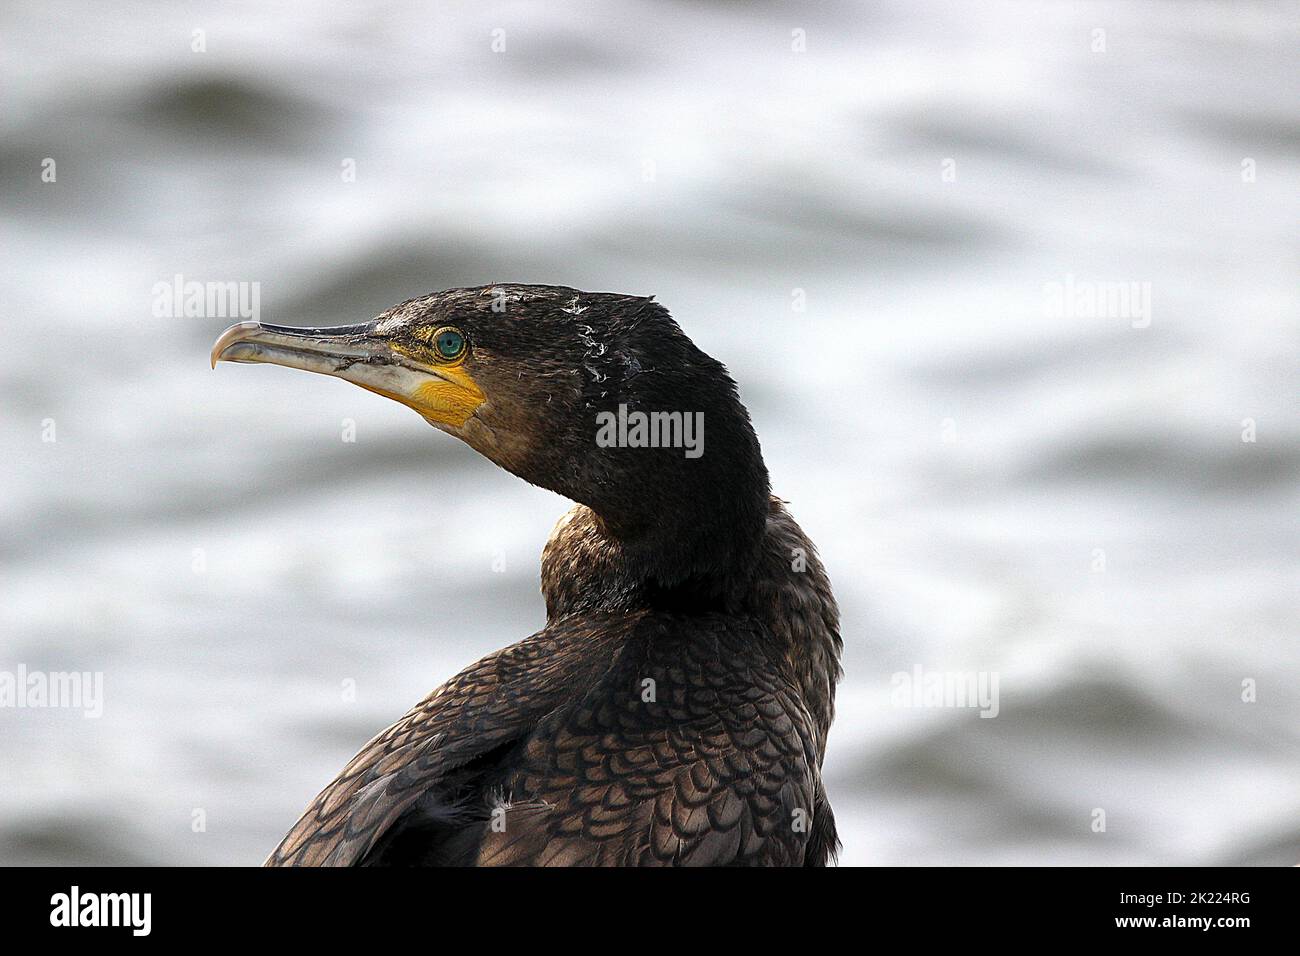 image of great cormorant (Phalacrocorax carbo) head looking left Stock Photo